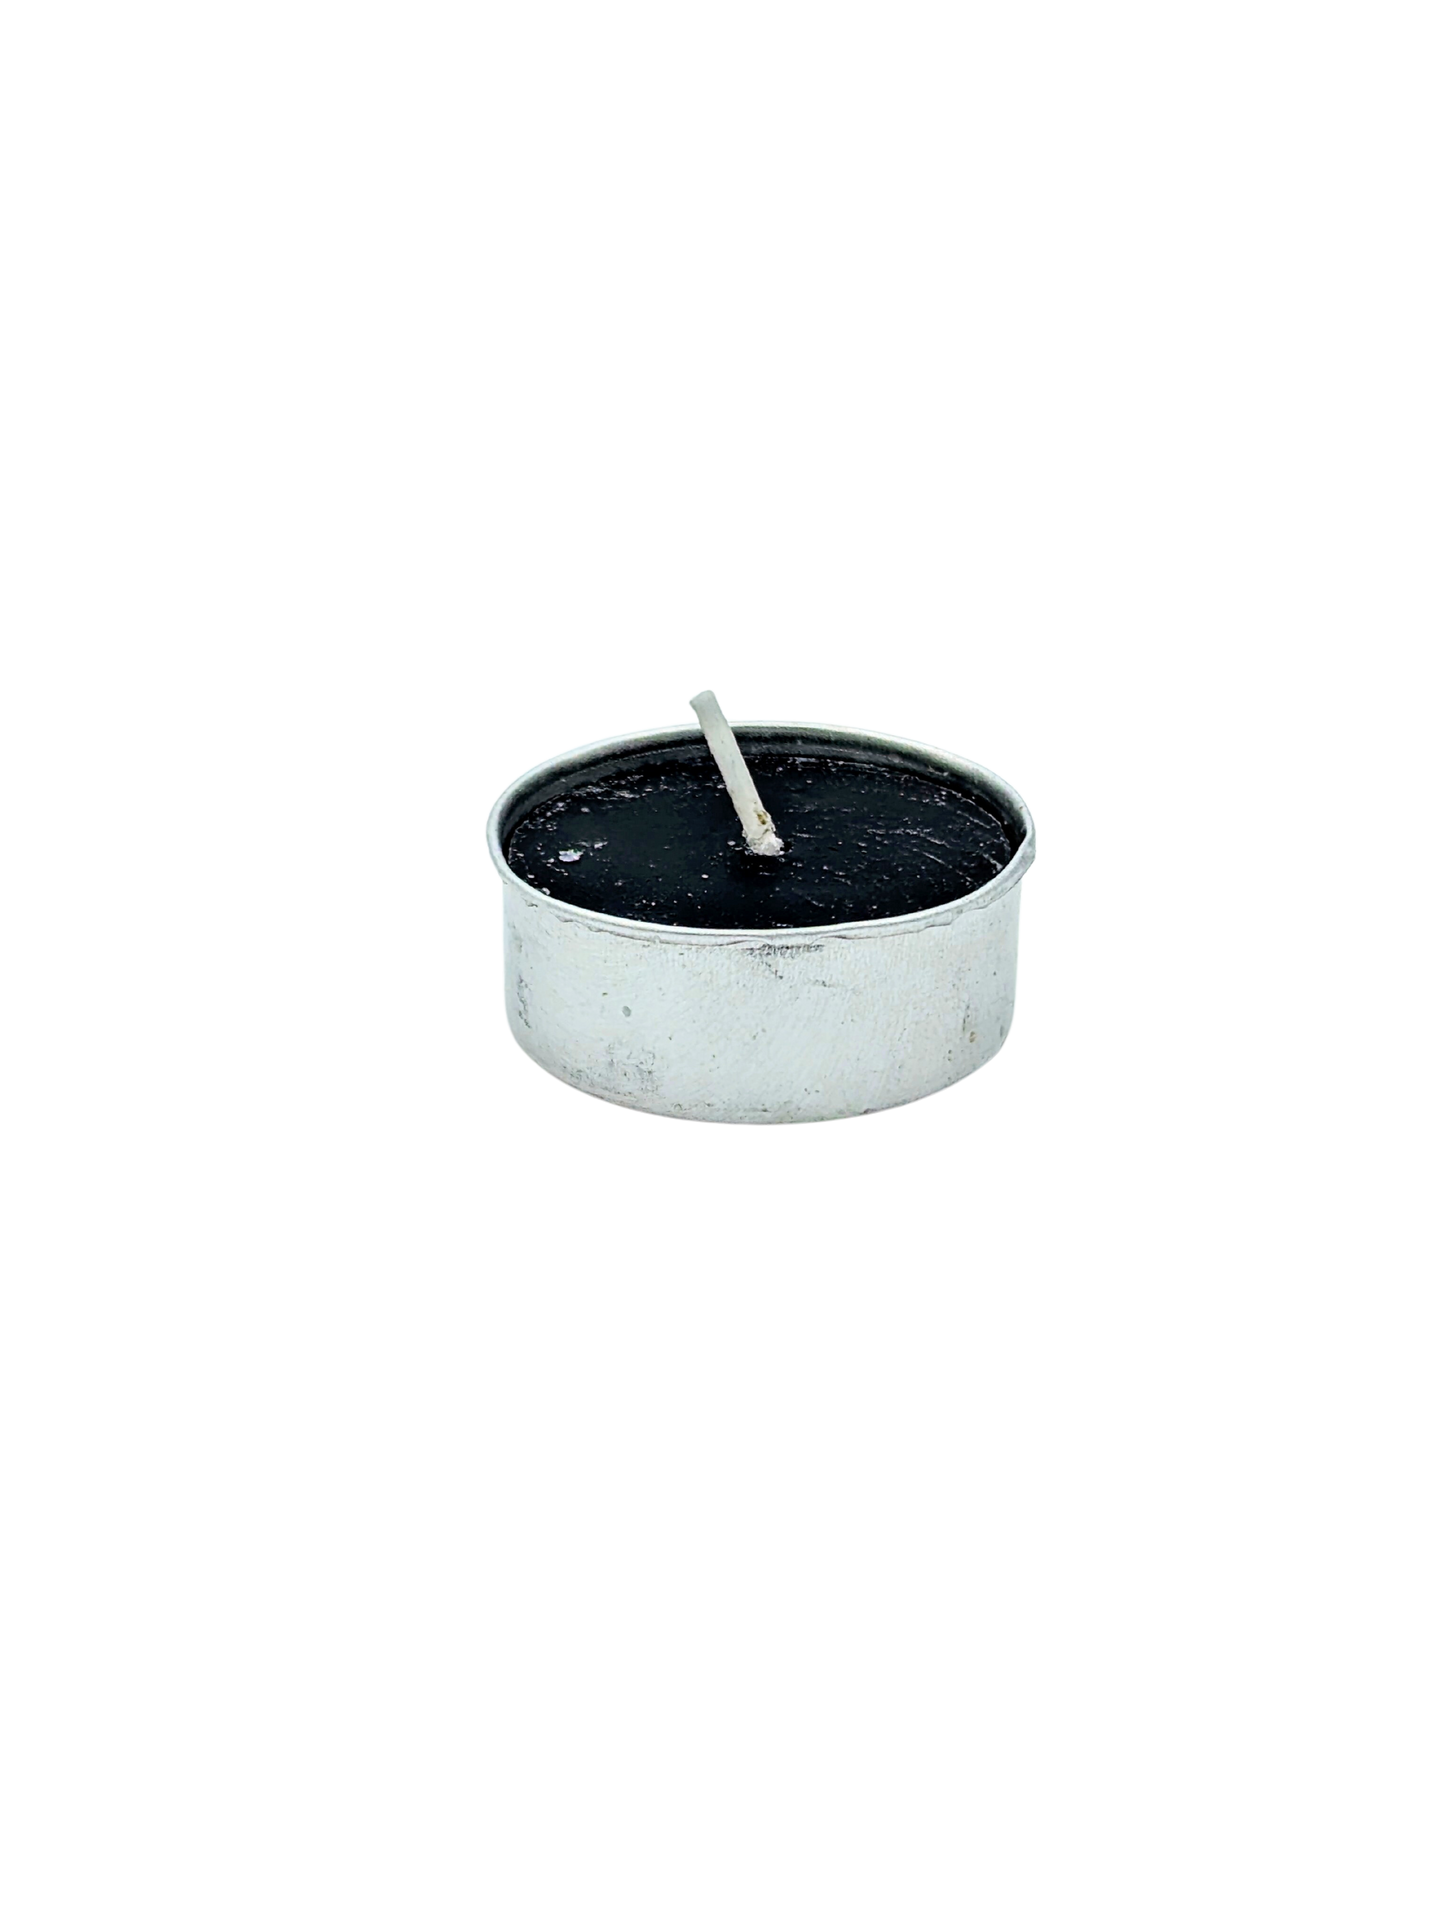 A black tea light candle